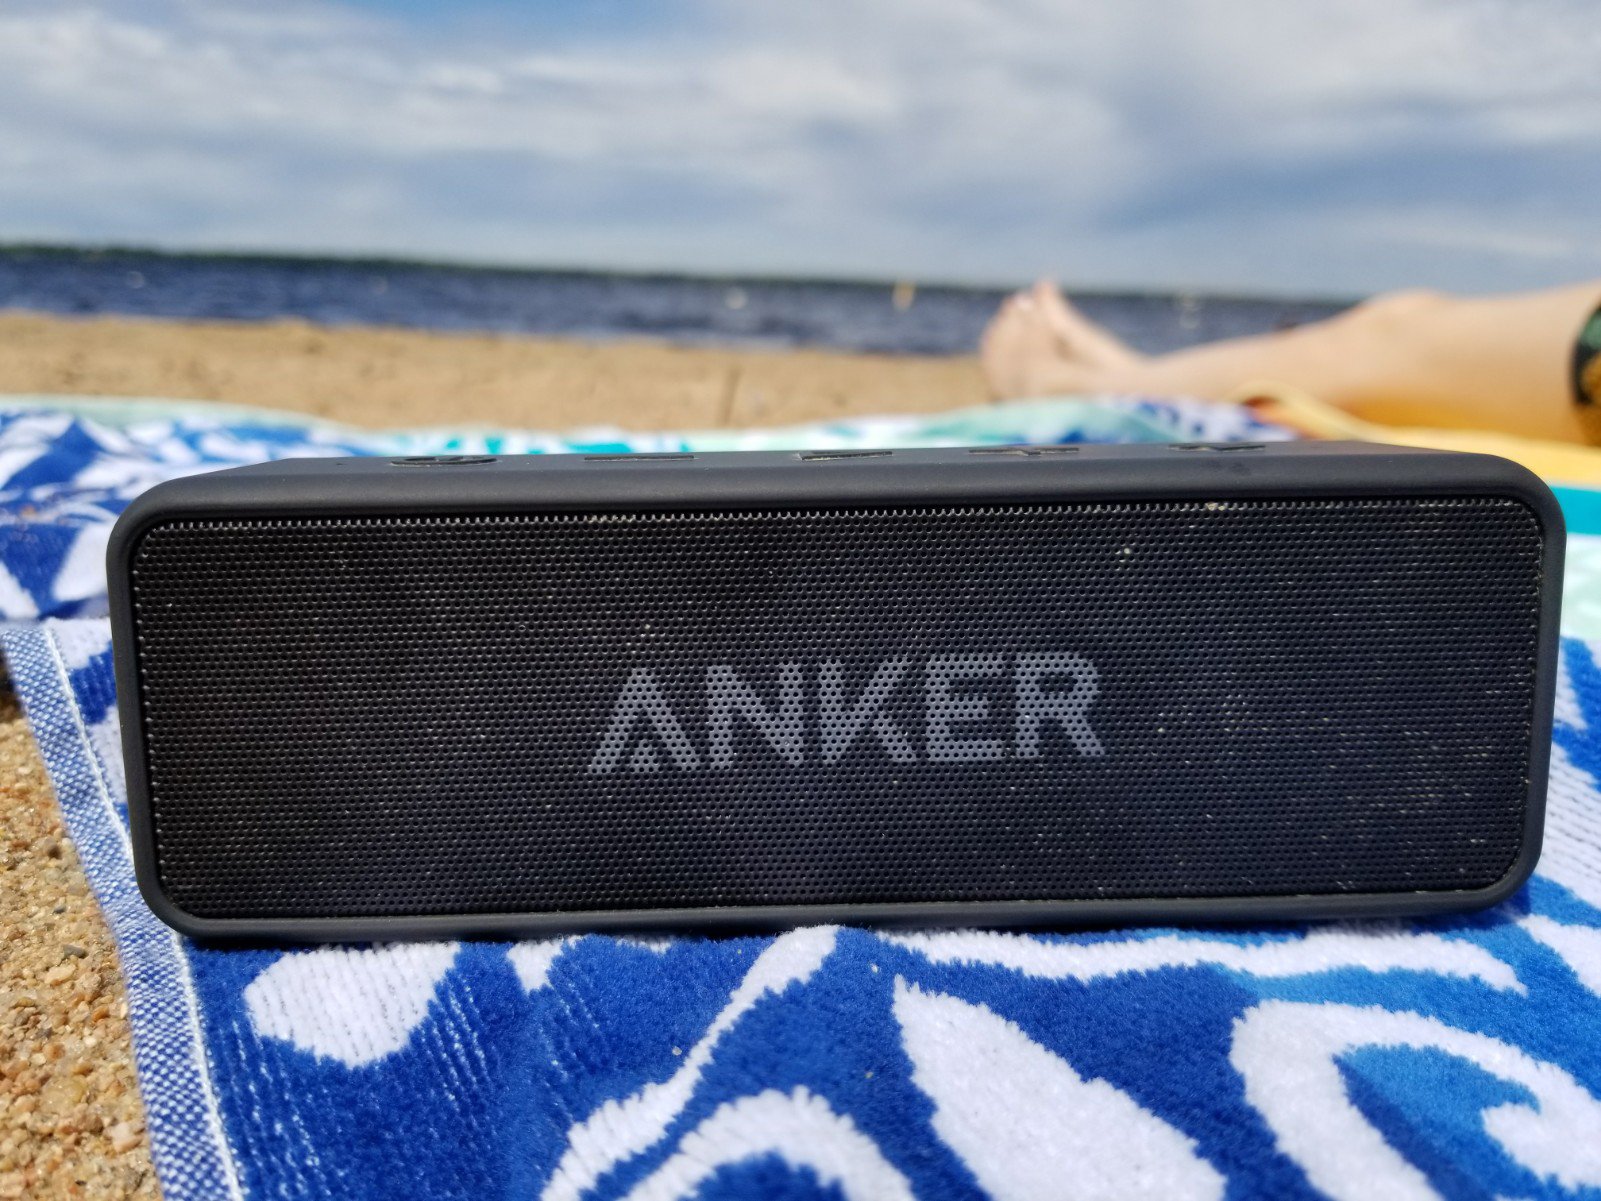 Anker Soundcore 2 sitting on beach towel